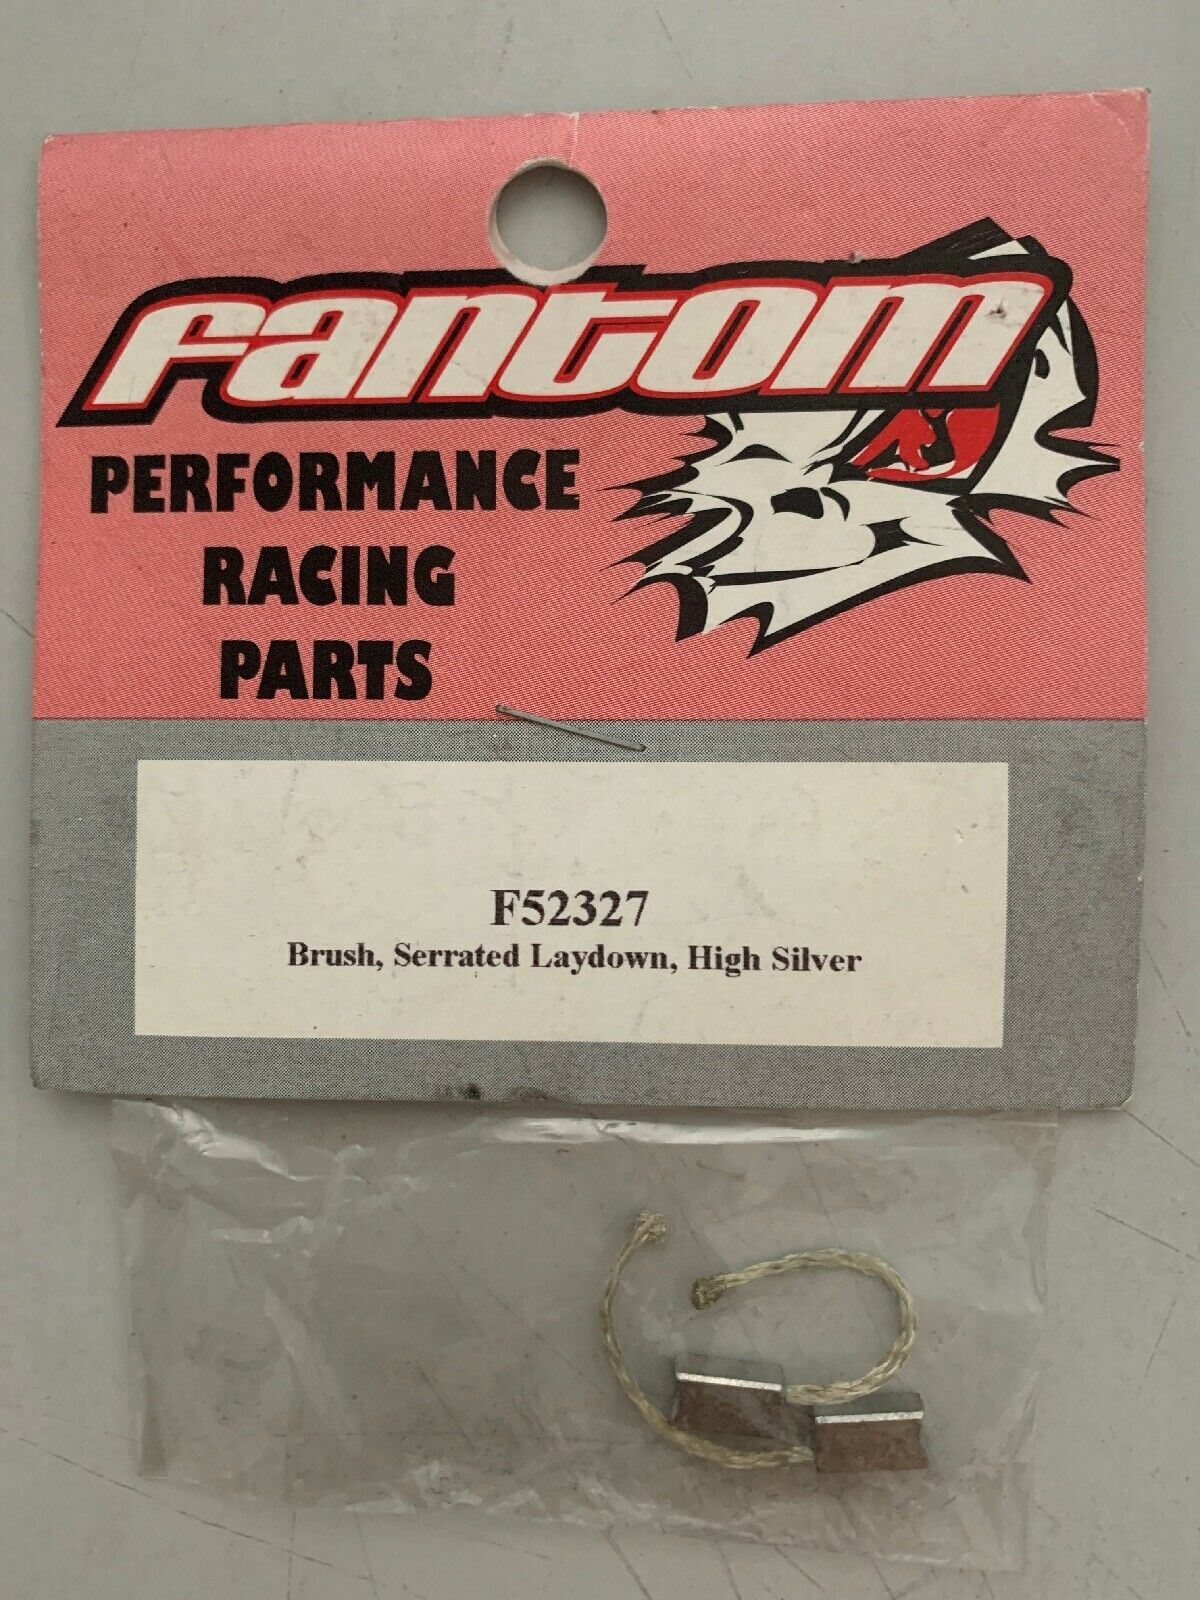 Fantom F52327 Brush, Serrated Laydown, High Silver Performance Racing Parts